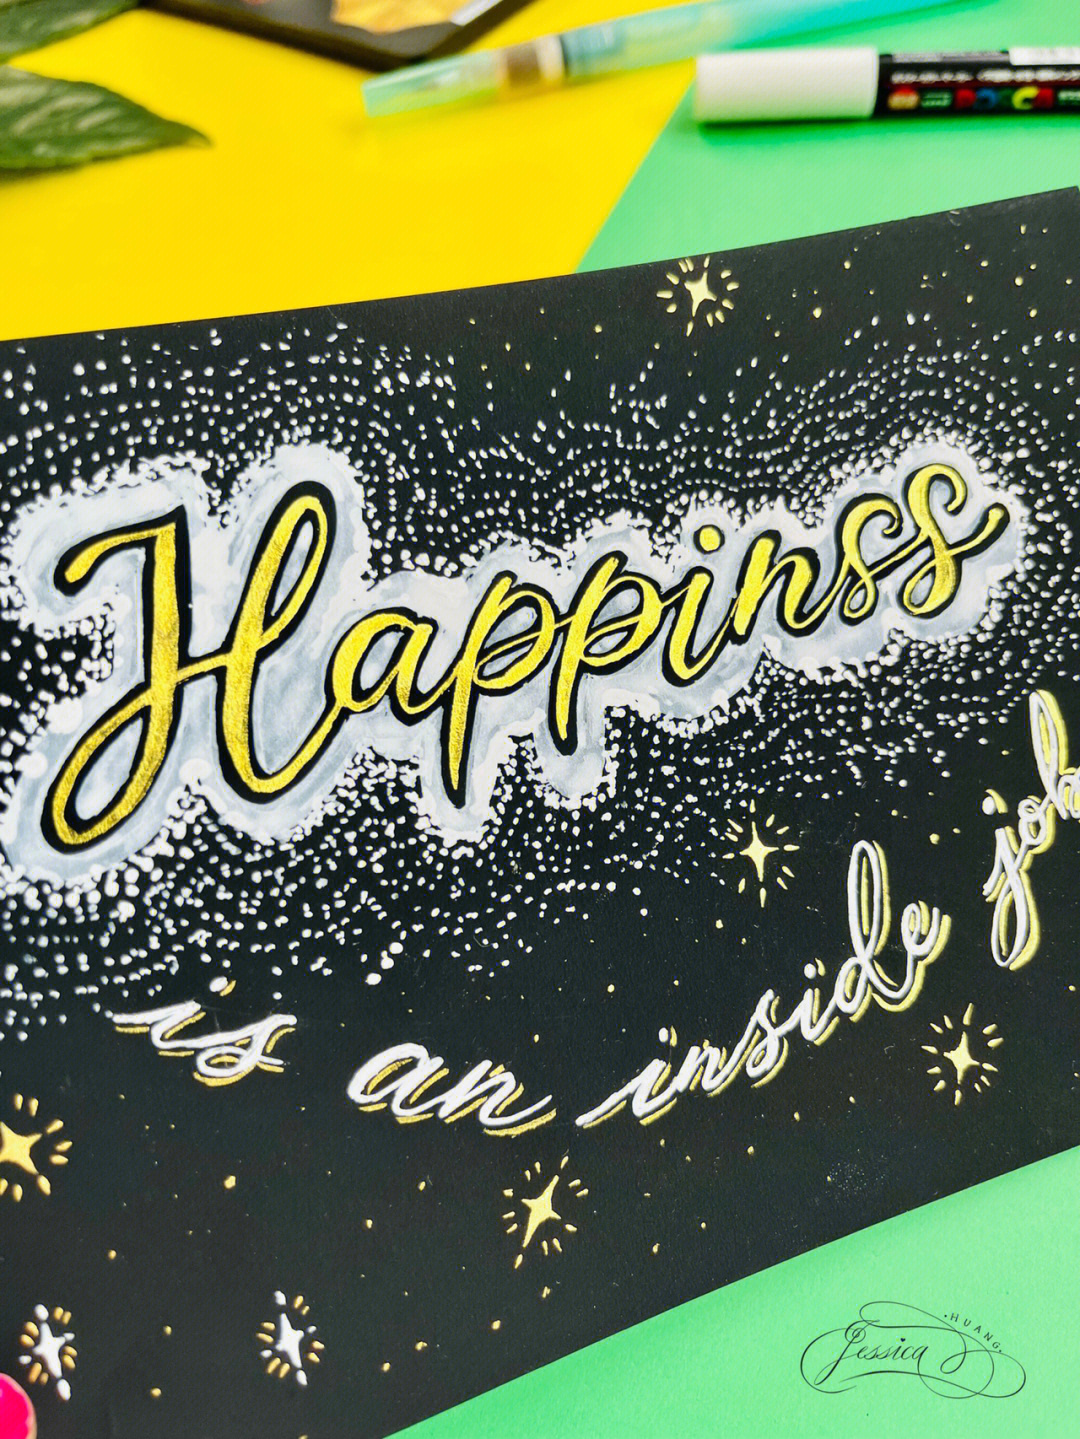 happiness字体图片